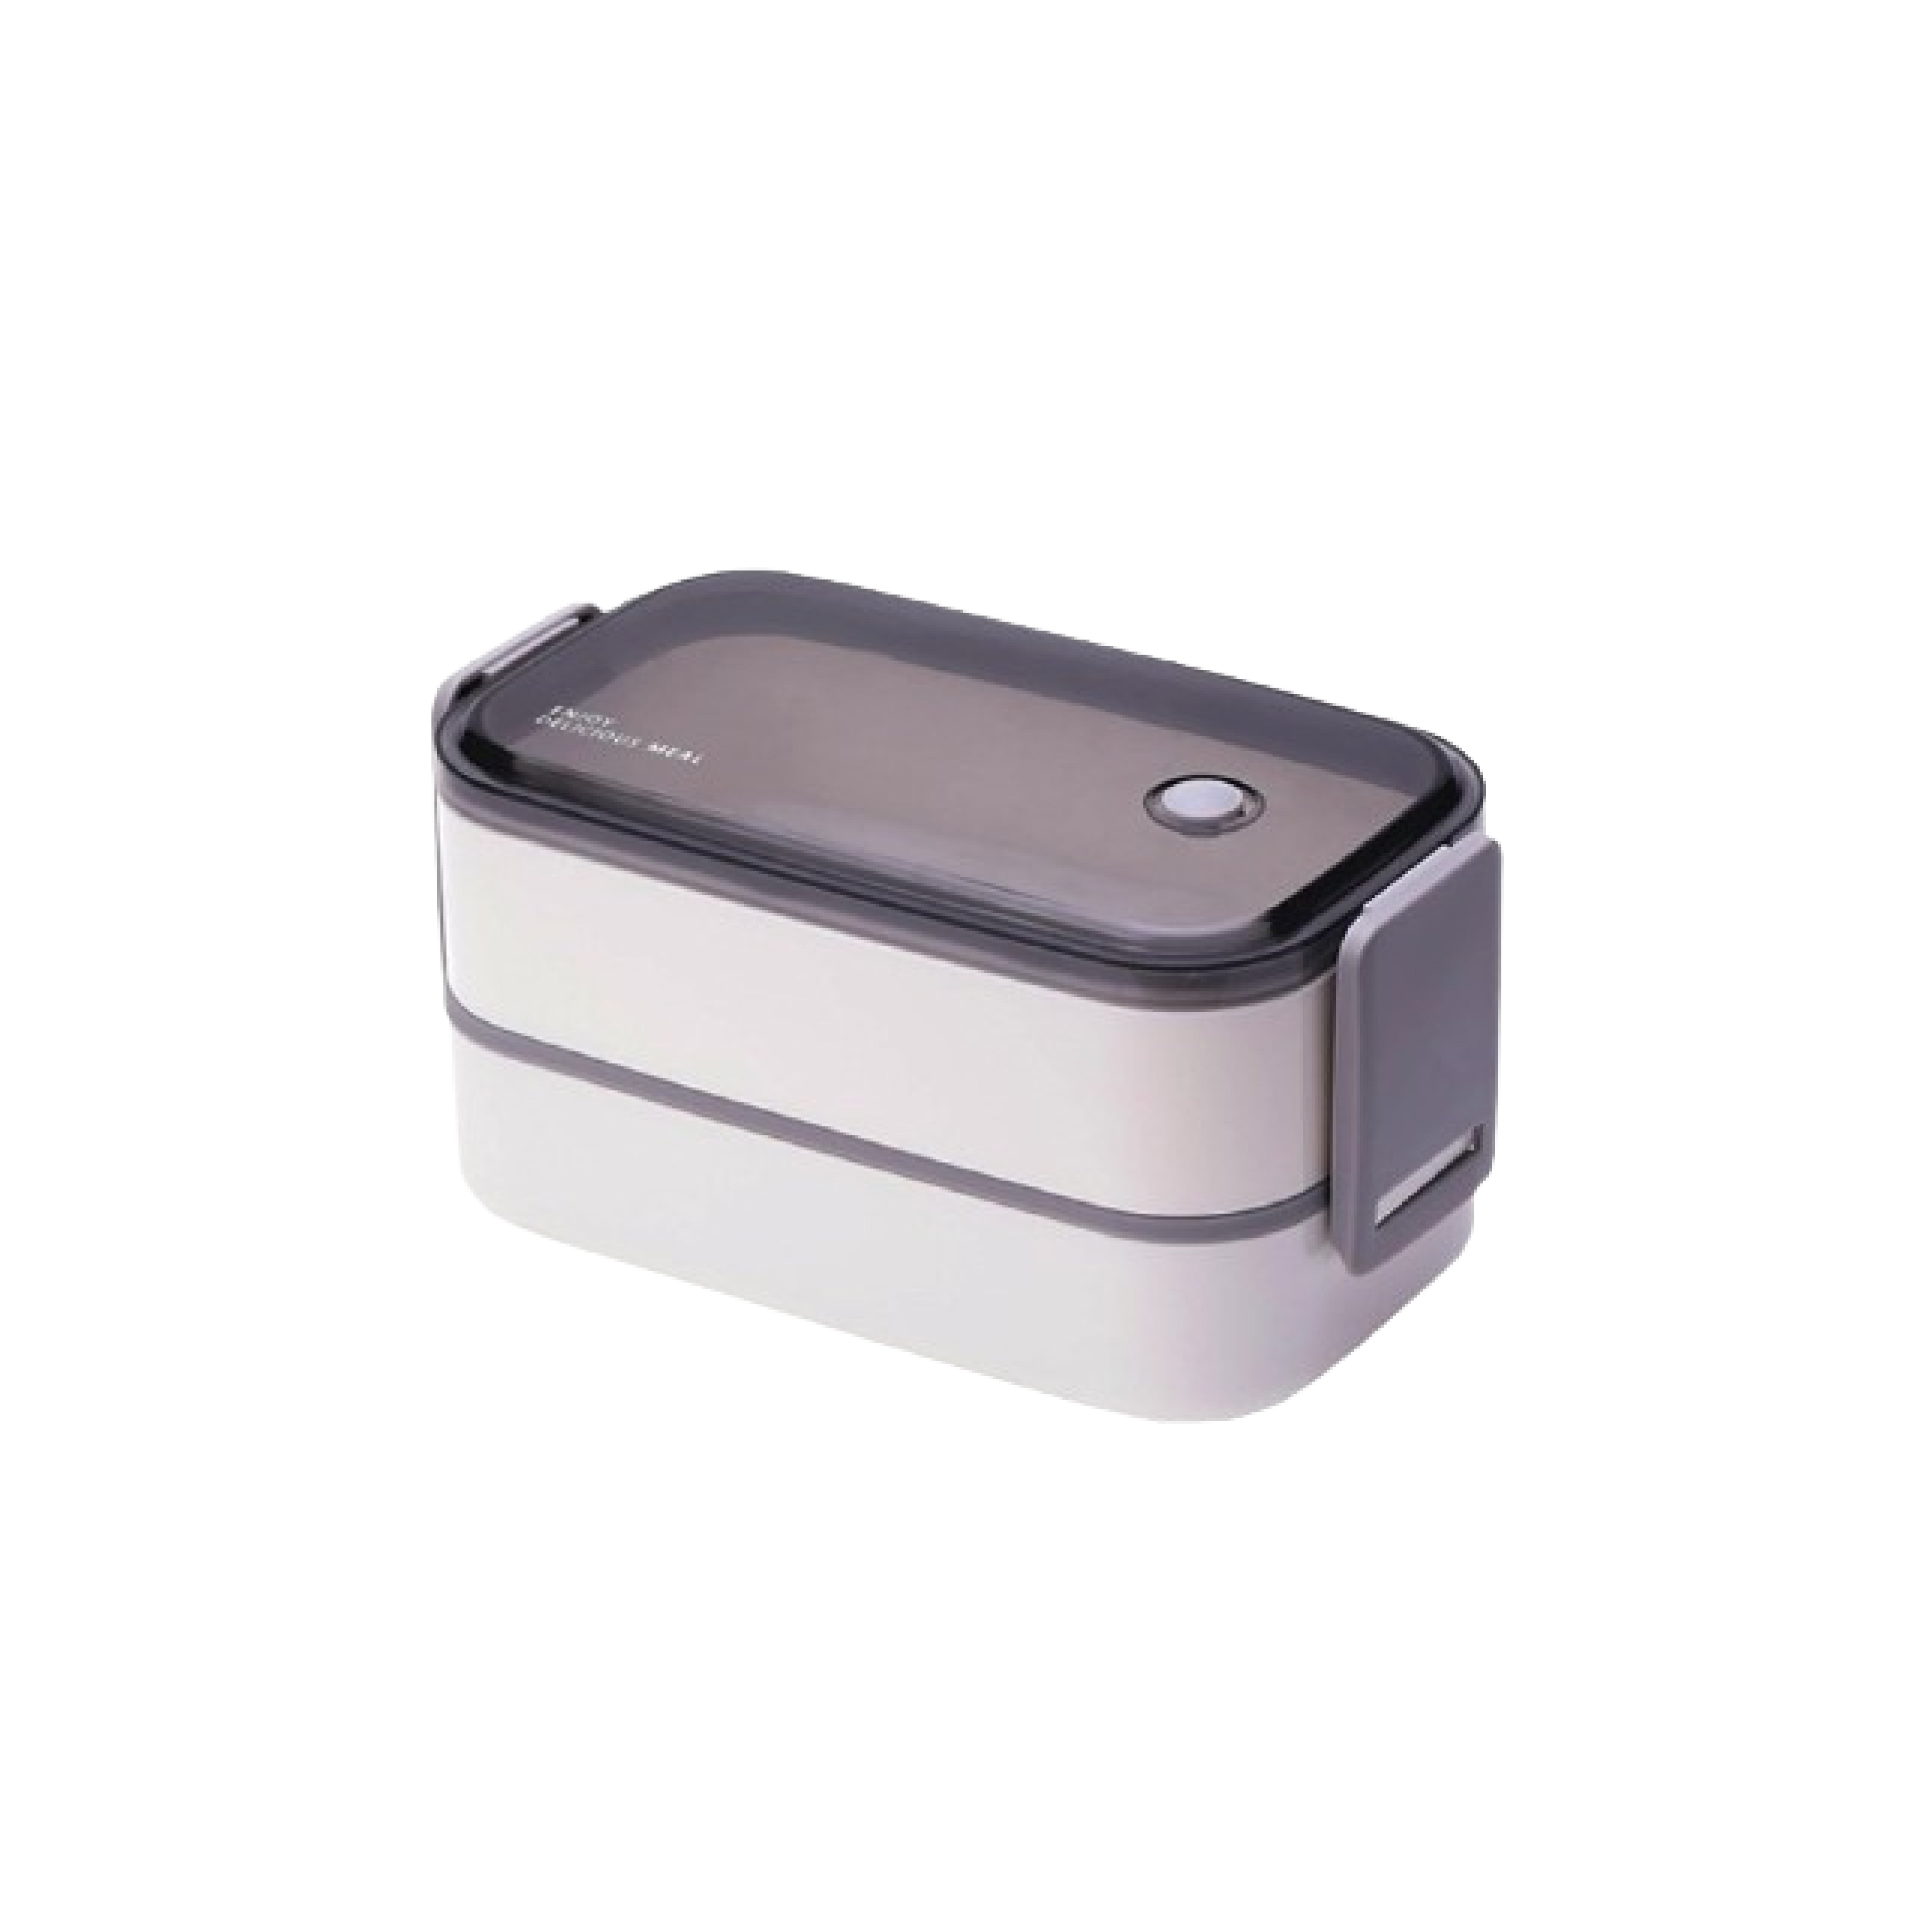 BONBOX BTW40 2-layer thermal lunch box